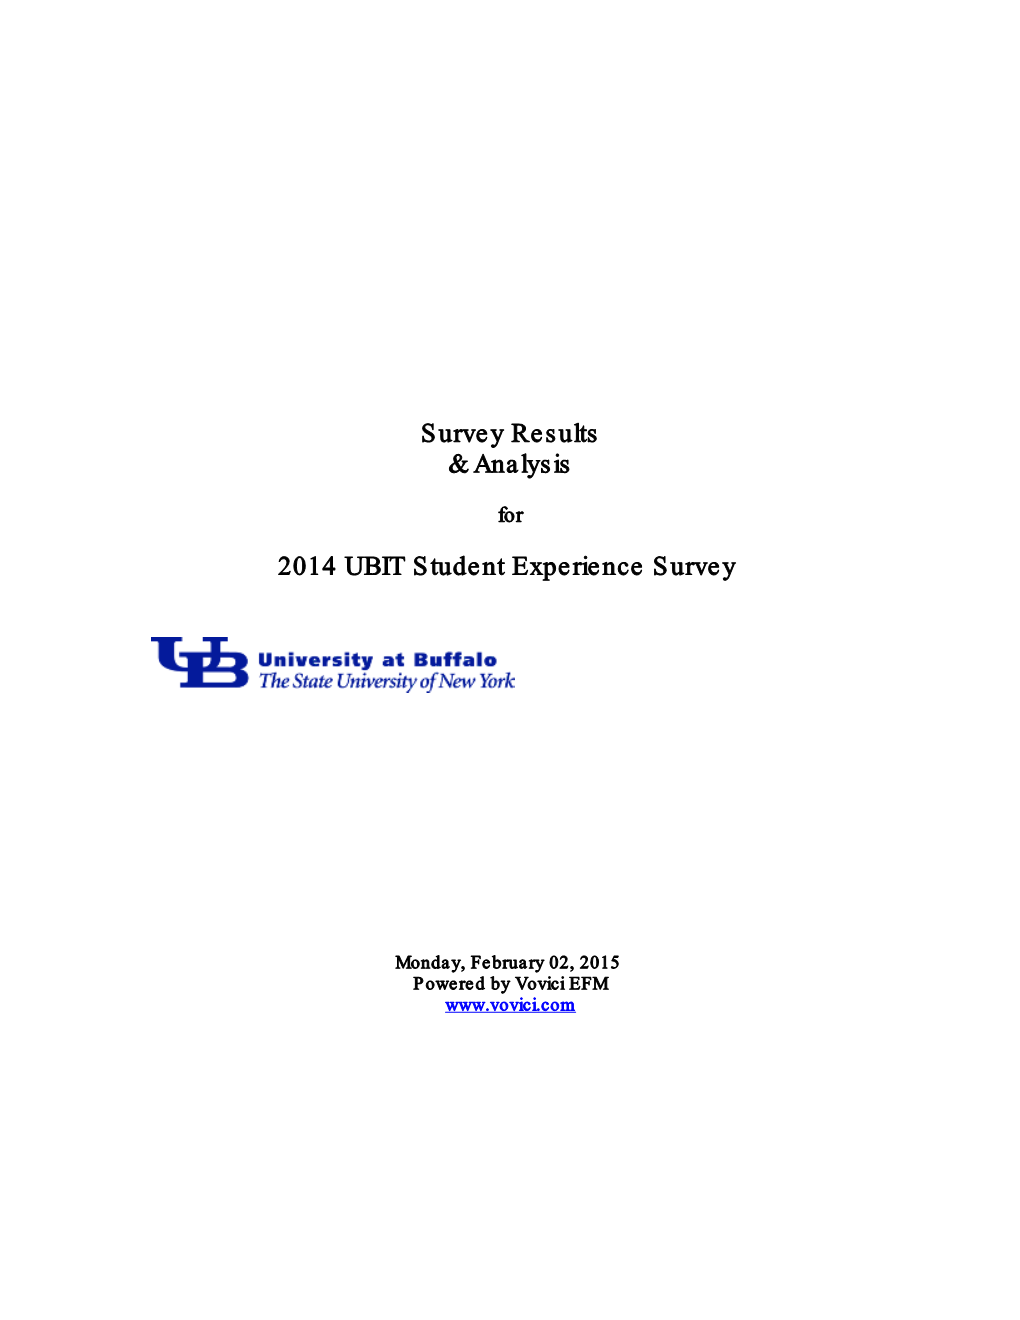 Survey Results & Analysis 2014 UBIT Student Experience Survey